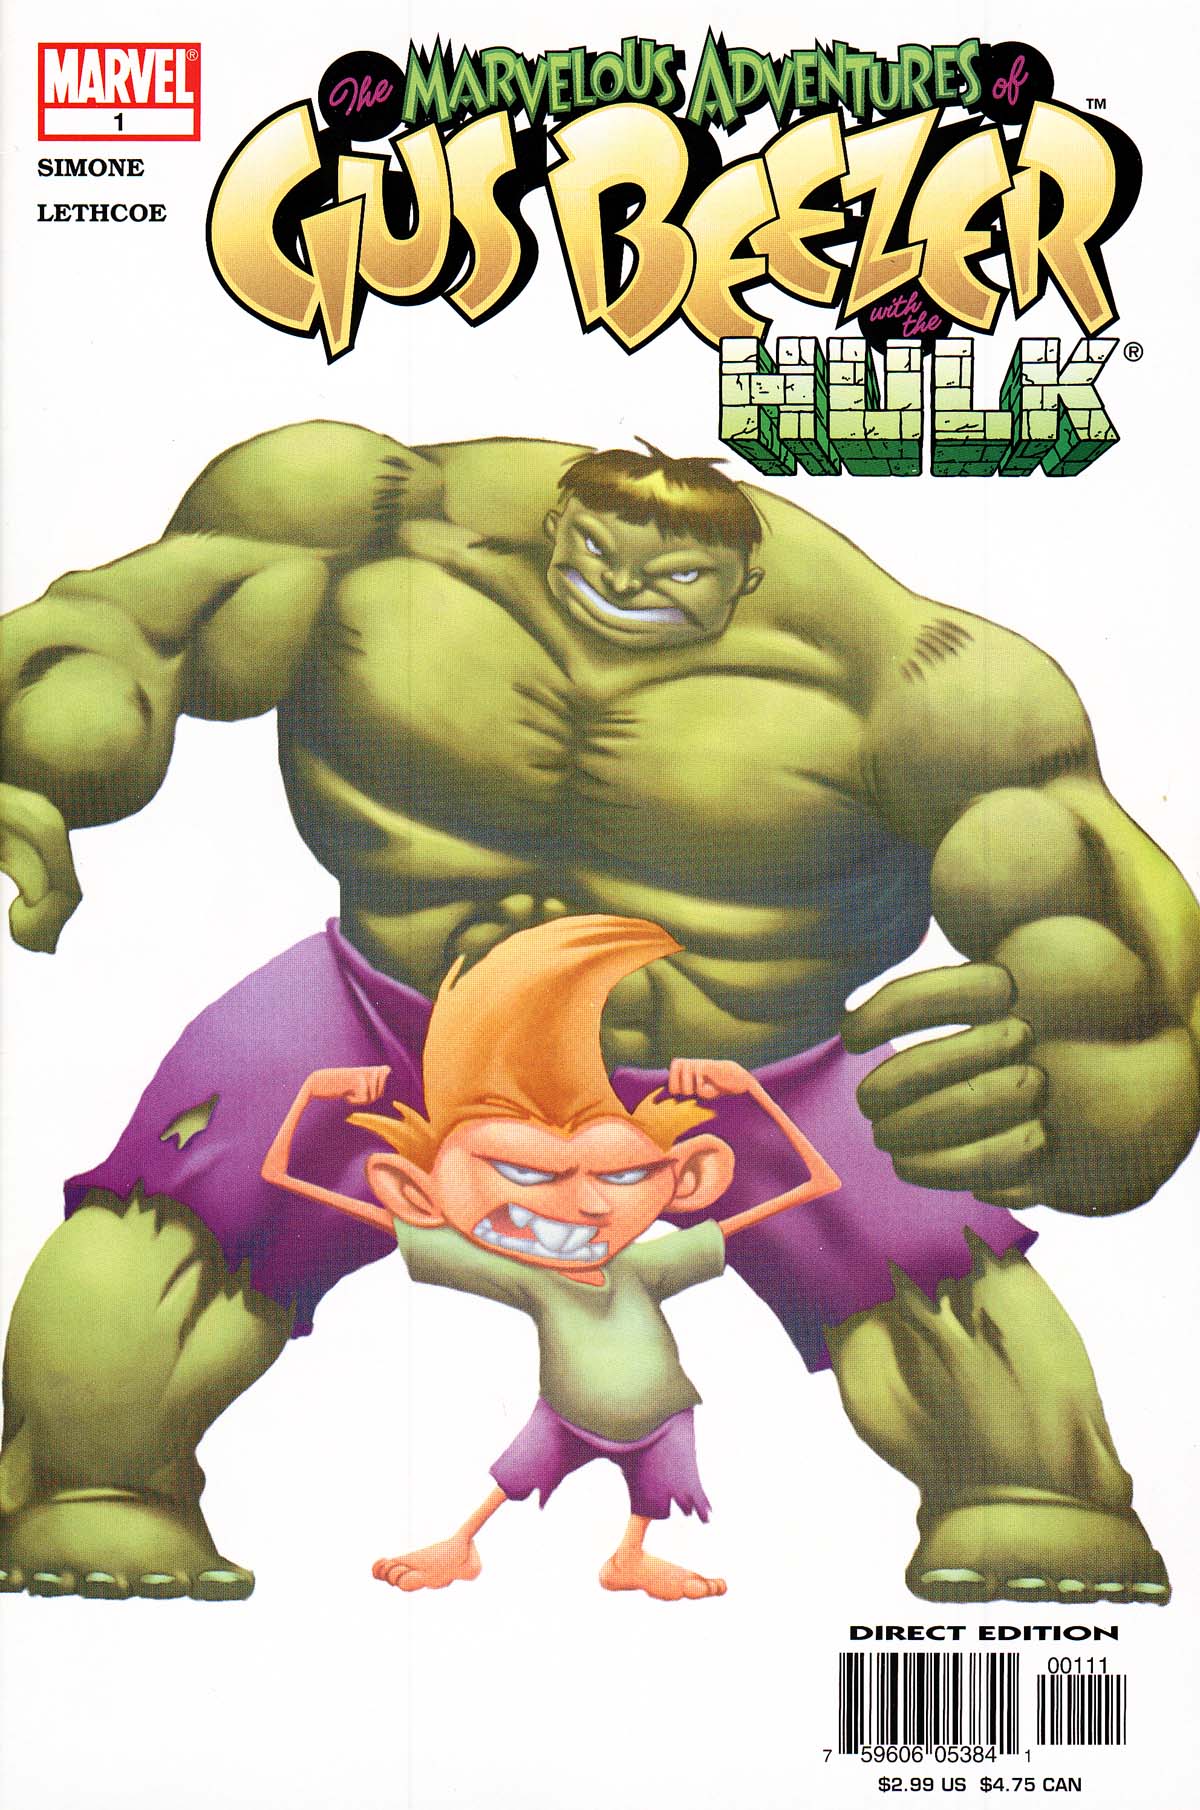 Read online Marvelous Adventures of Gus Beezer comic -  Issue # Hulk - 1